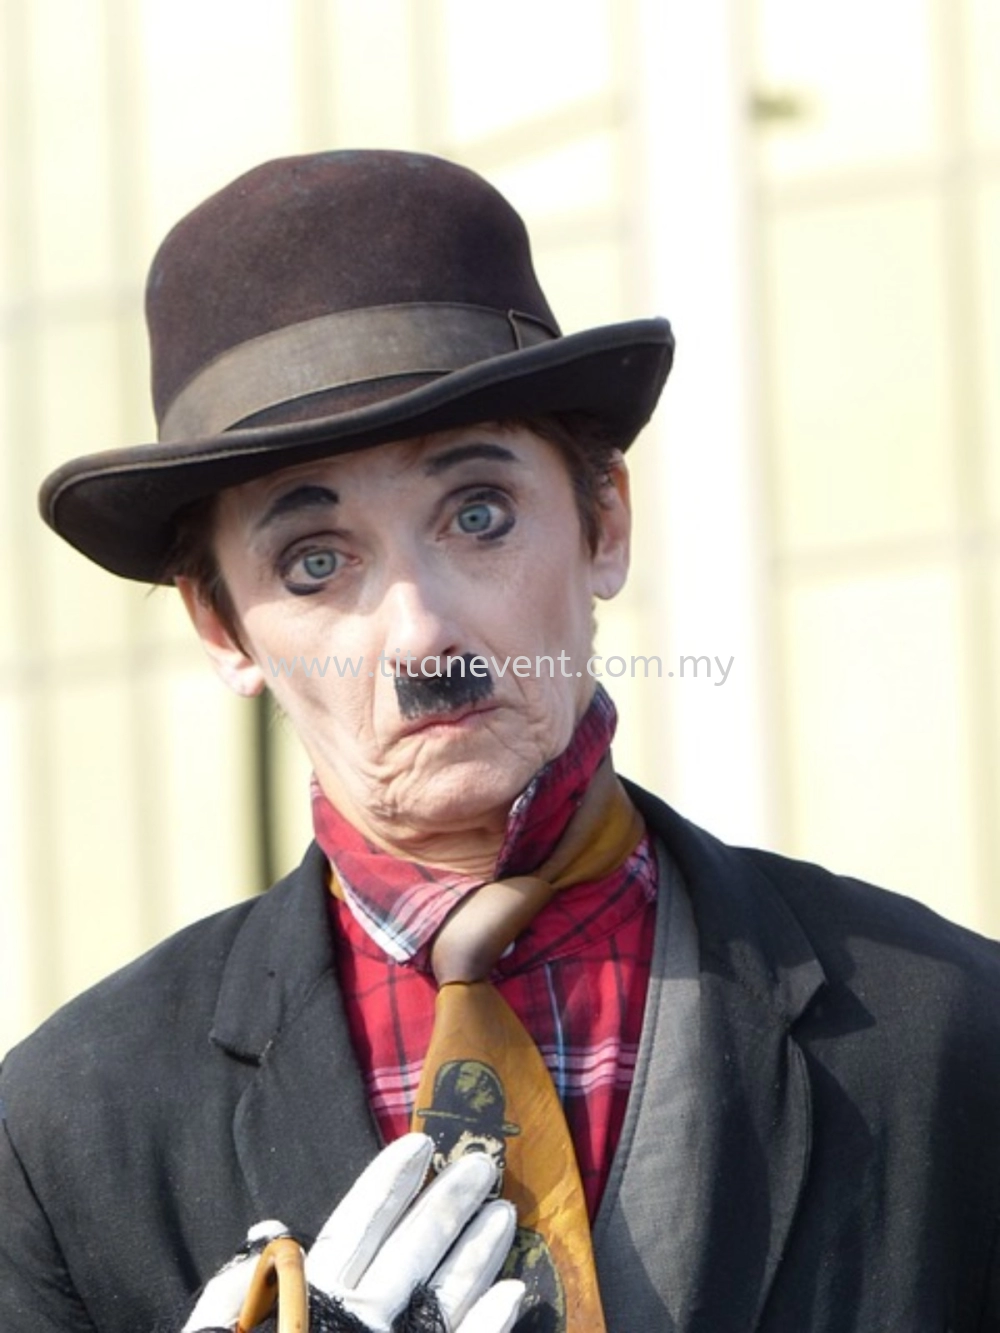 Charlie Chaplin Impersonator/Imitator: The Comedy Royalty Lives On